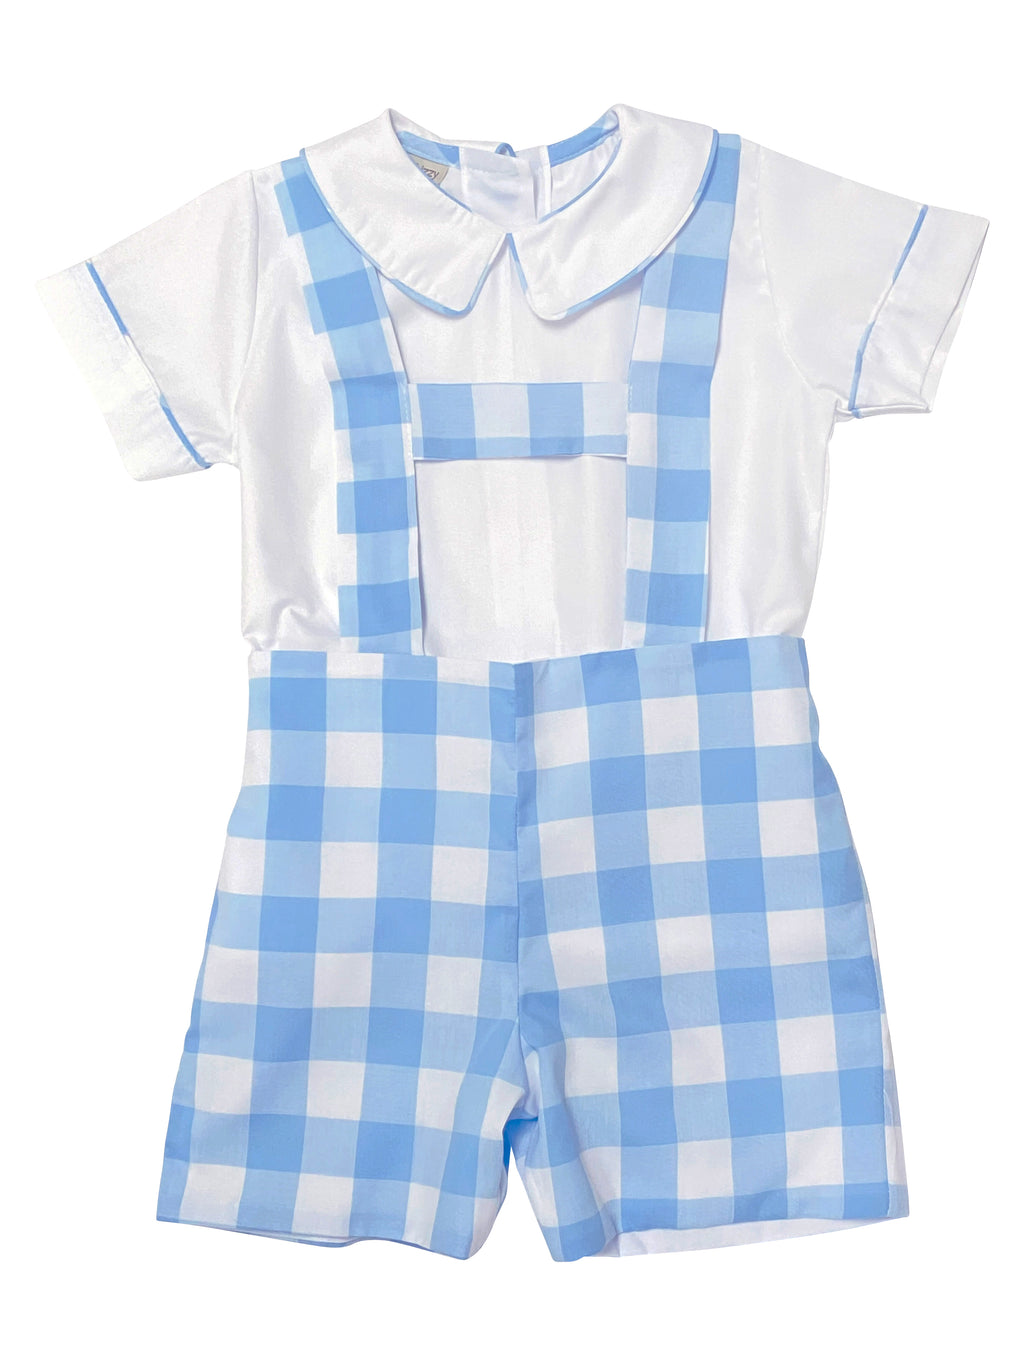 Boy's Blue Check Strap Short Set - Little Threads Inc. Children's Clothing